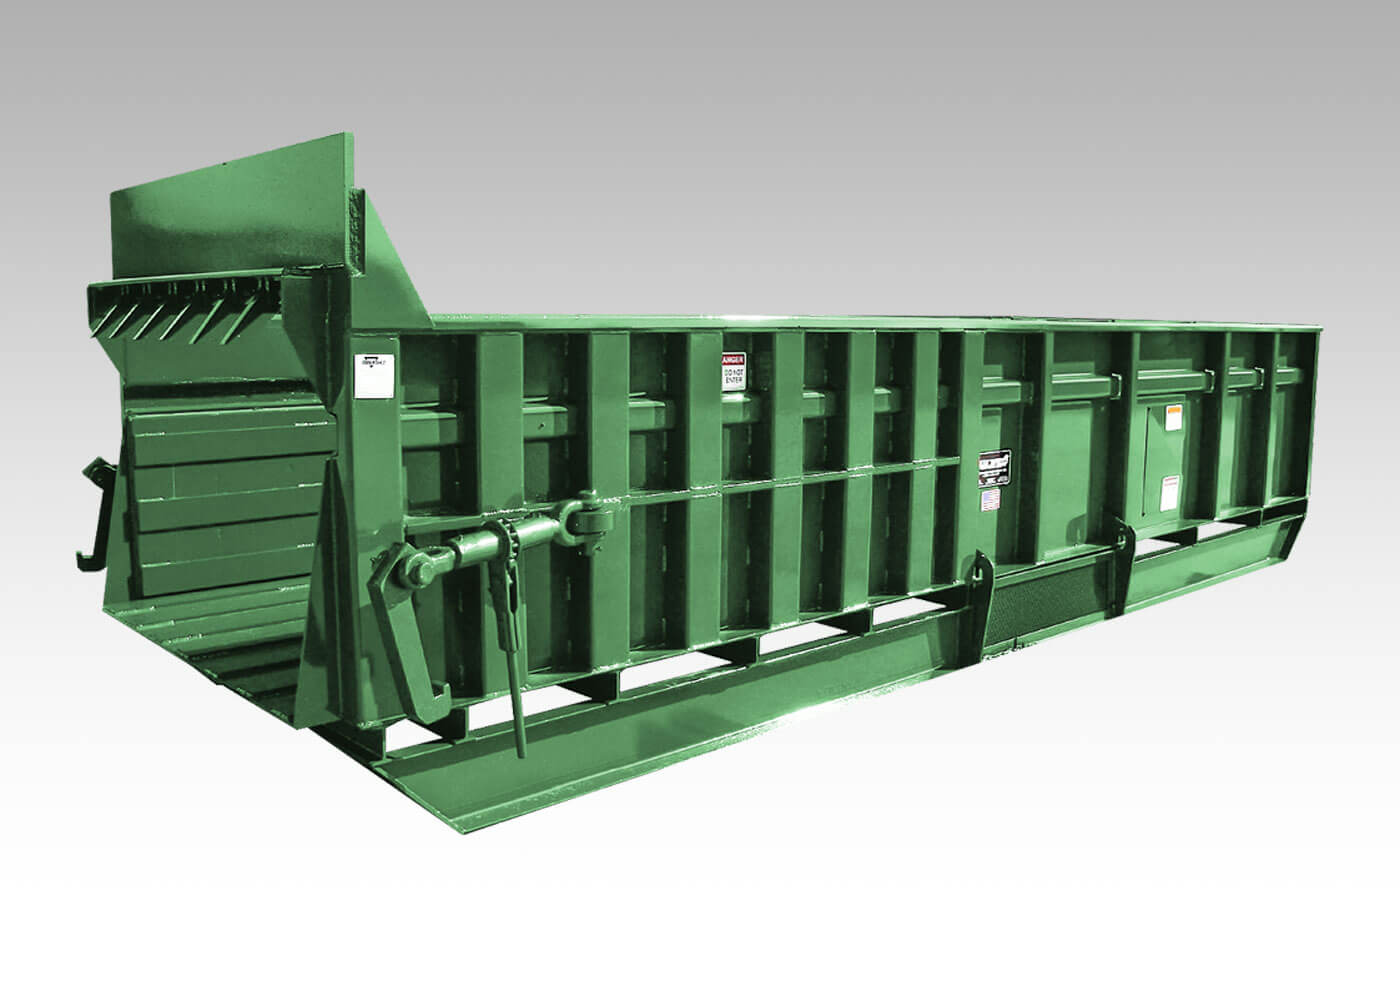 RJ-575 commercial stationary trash compactors by Marathon compaction equipment